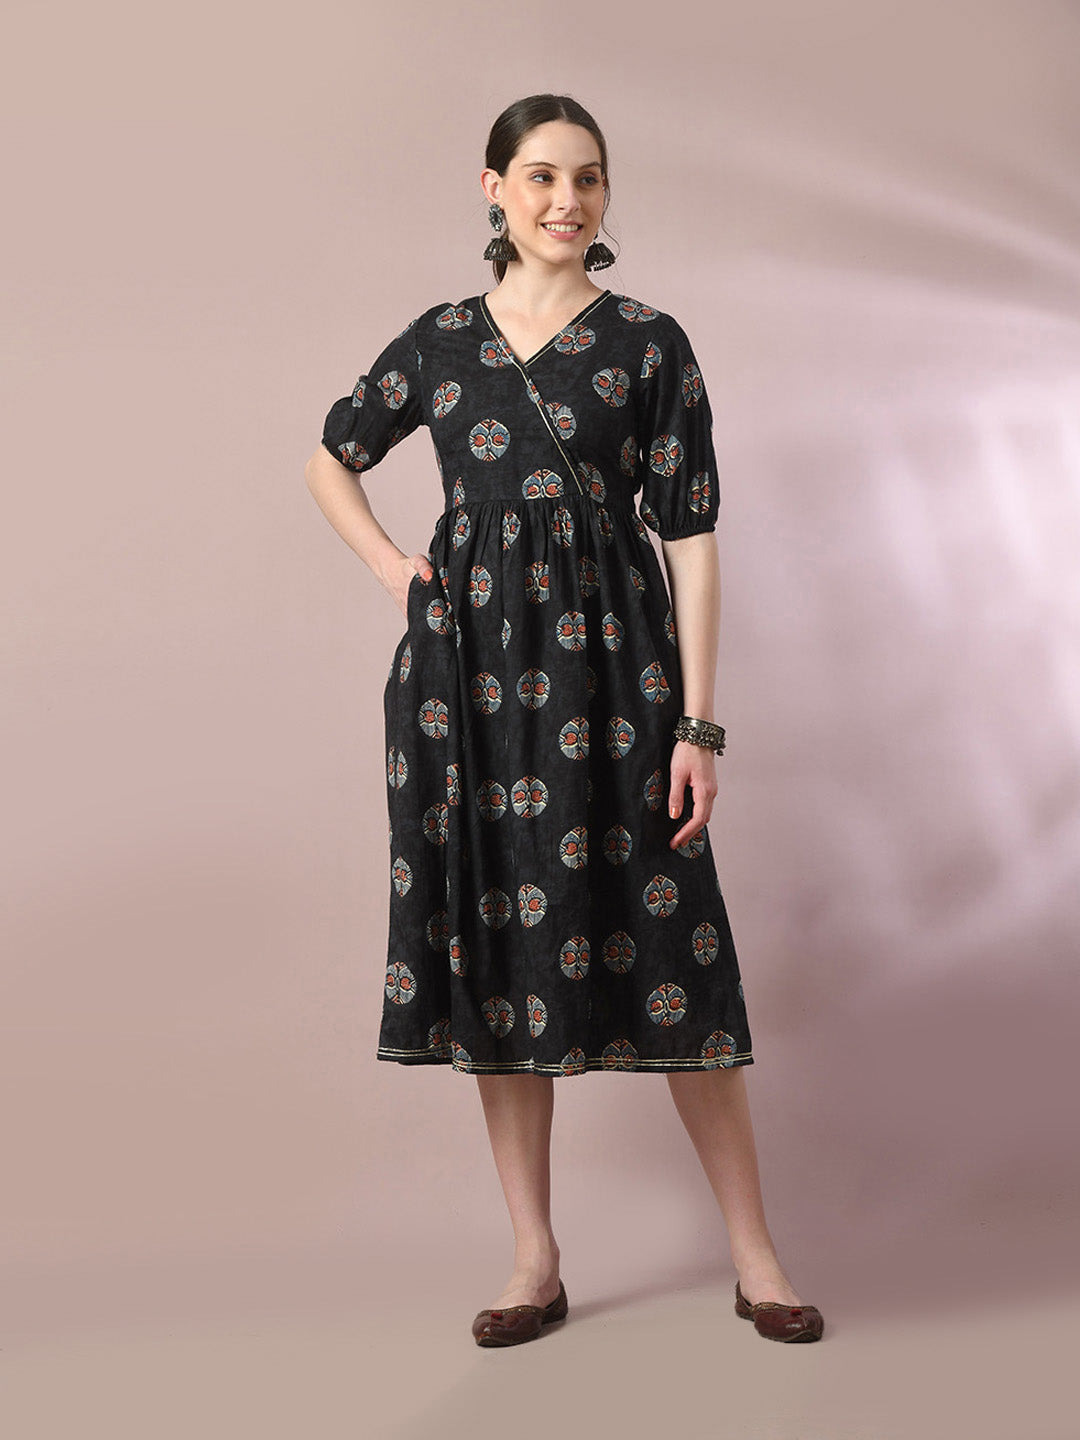 Women's  Black Printed Cotton V-Neck Empire Party Dress  - Myshka